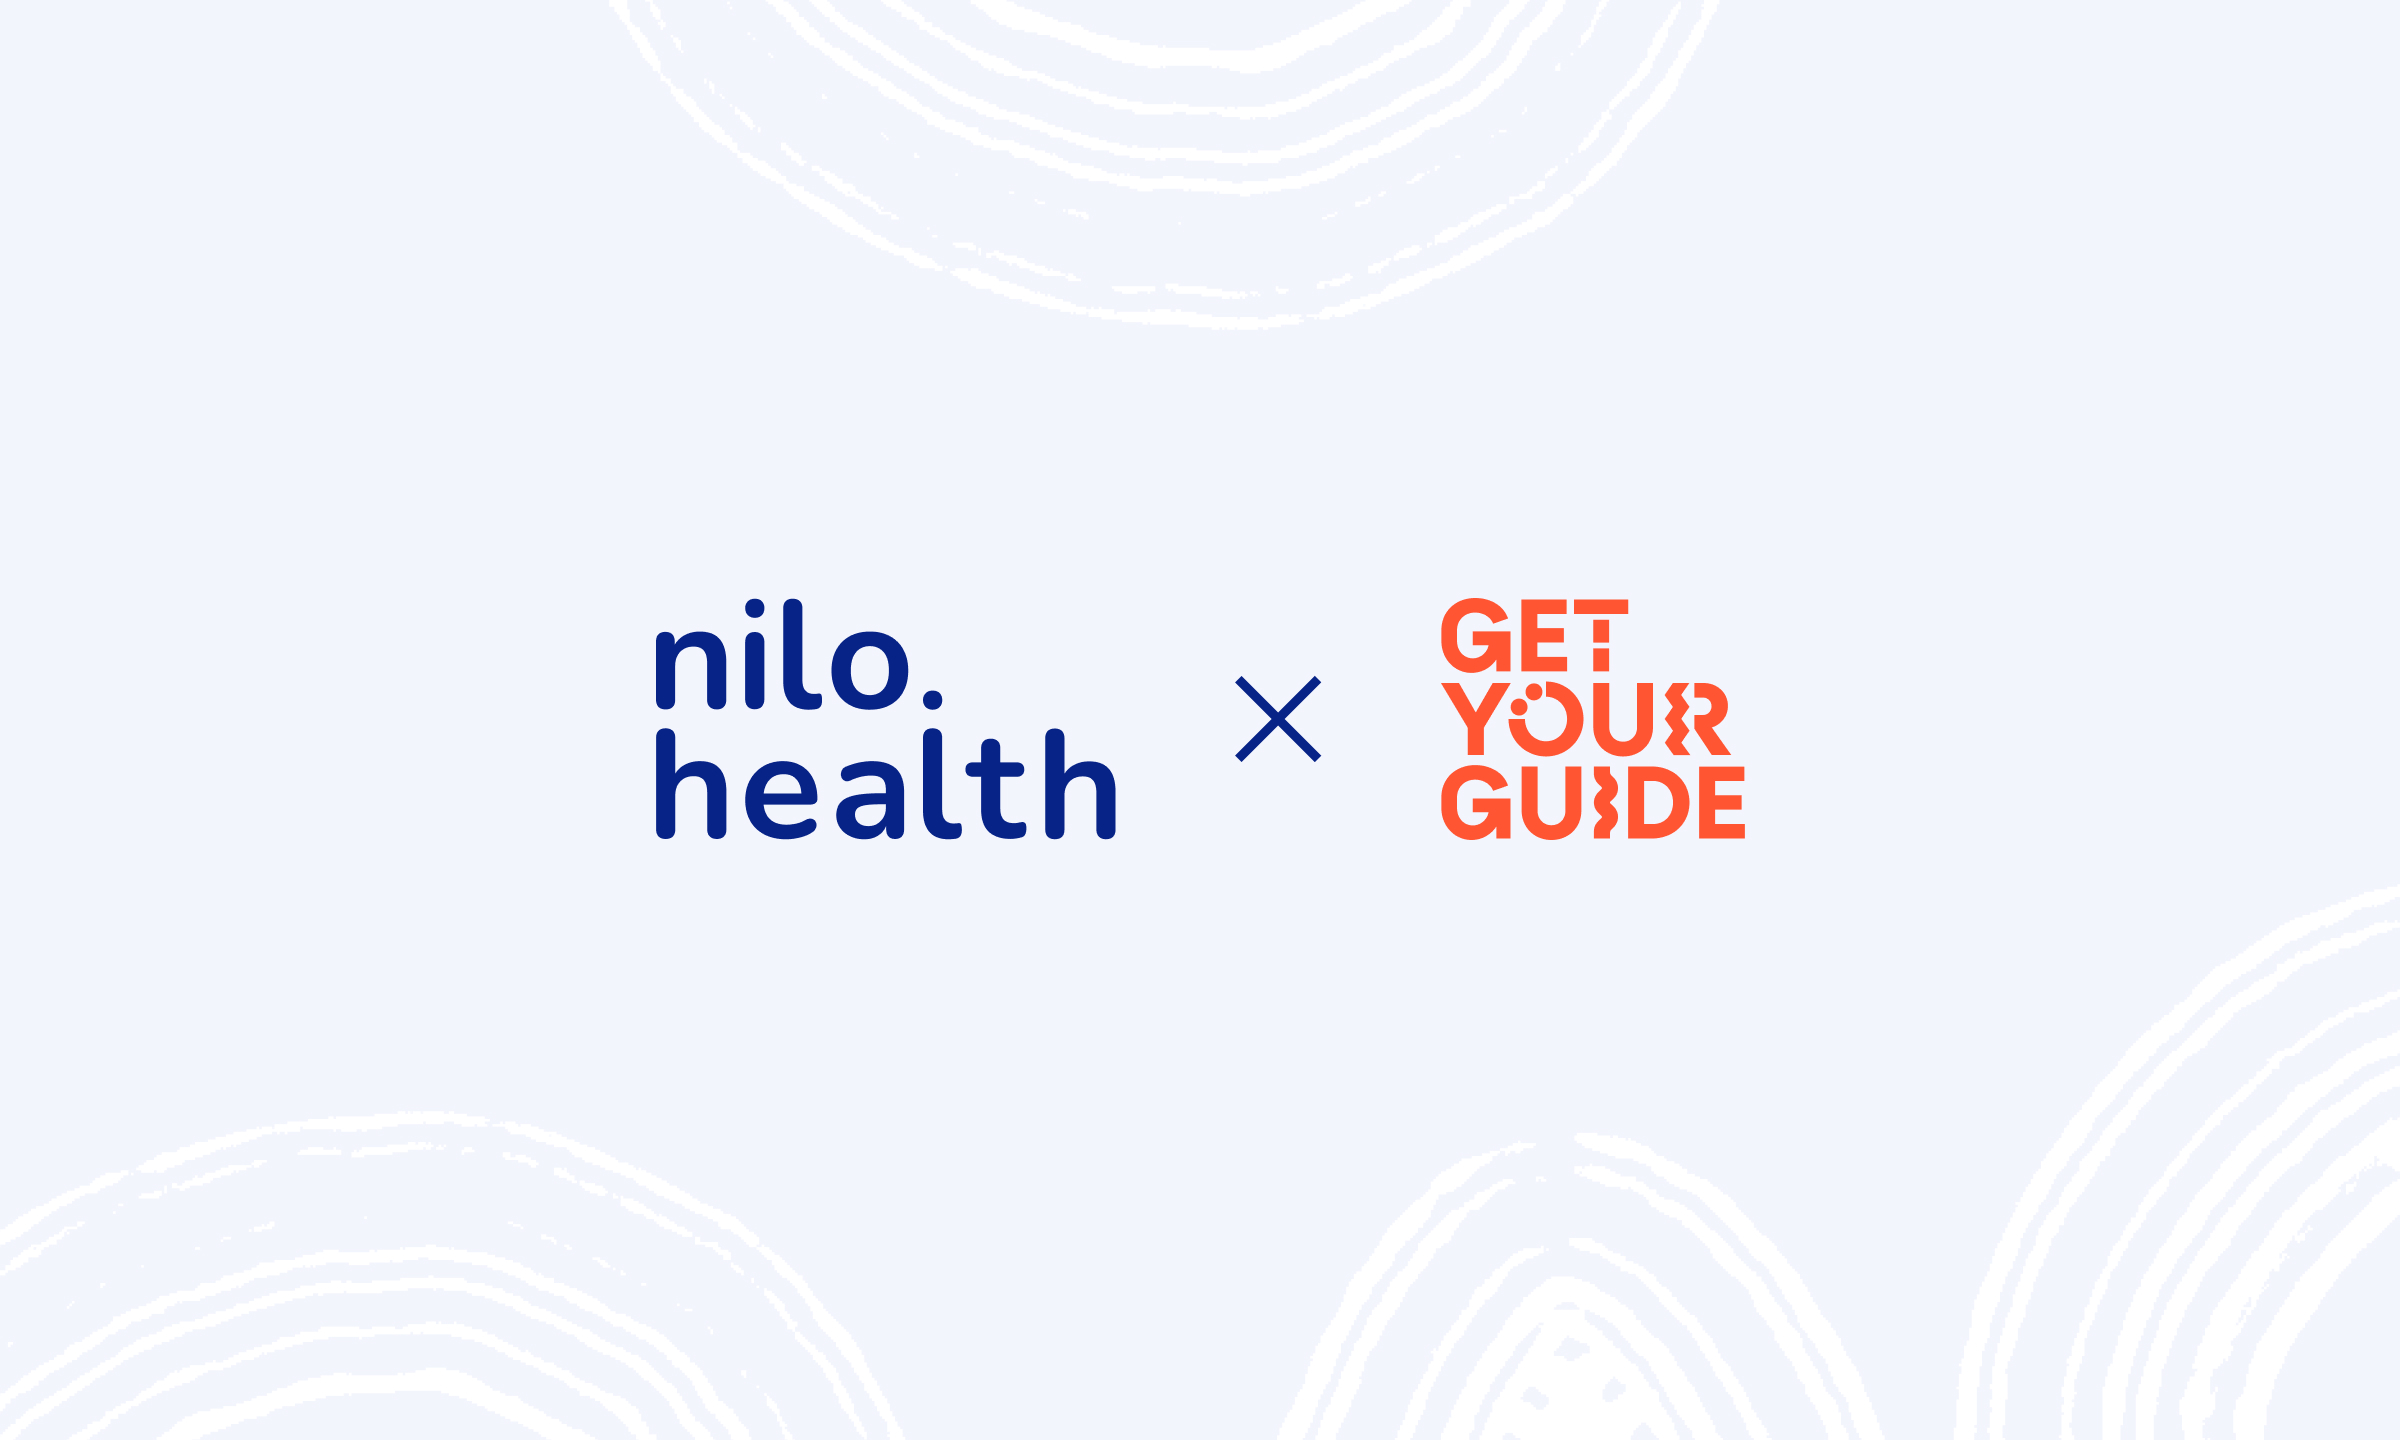 nilo.health Customer Stories – GetYourGuide